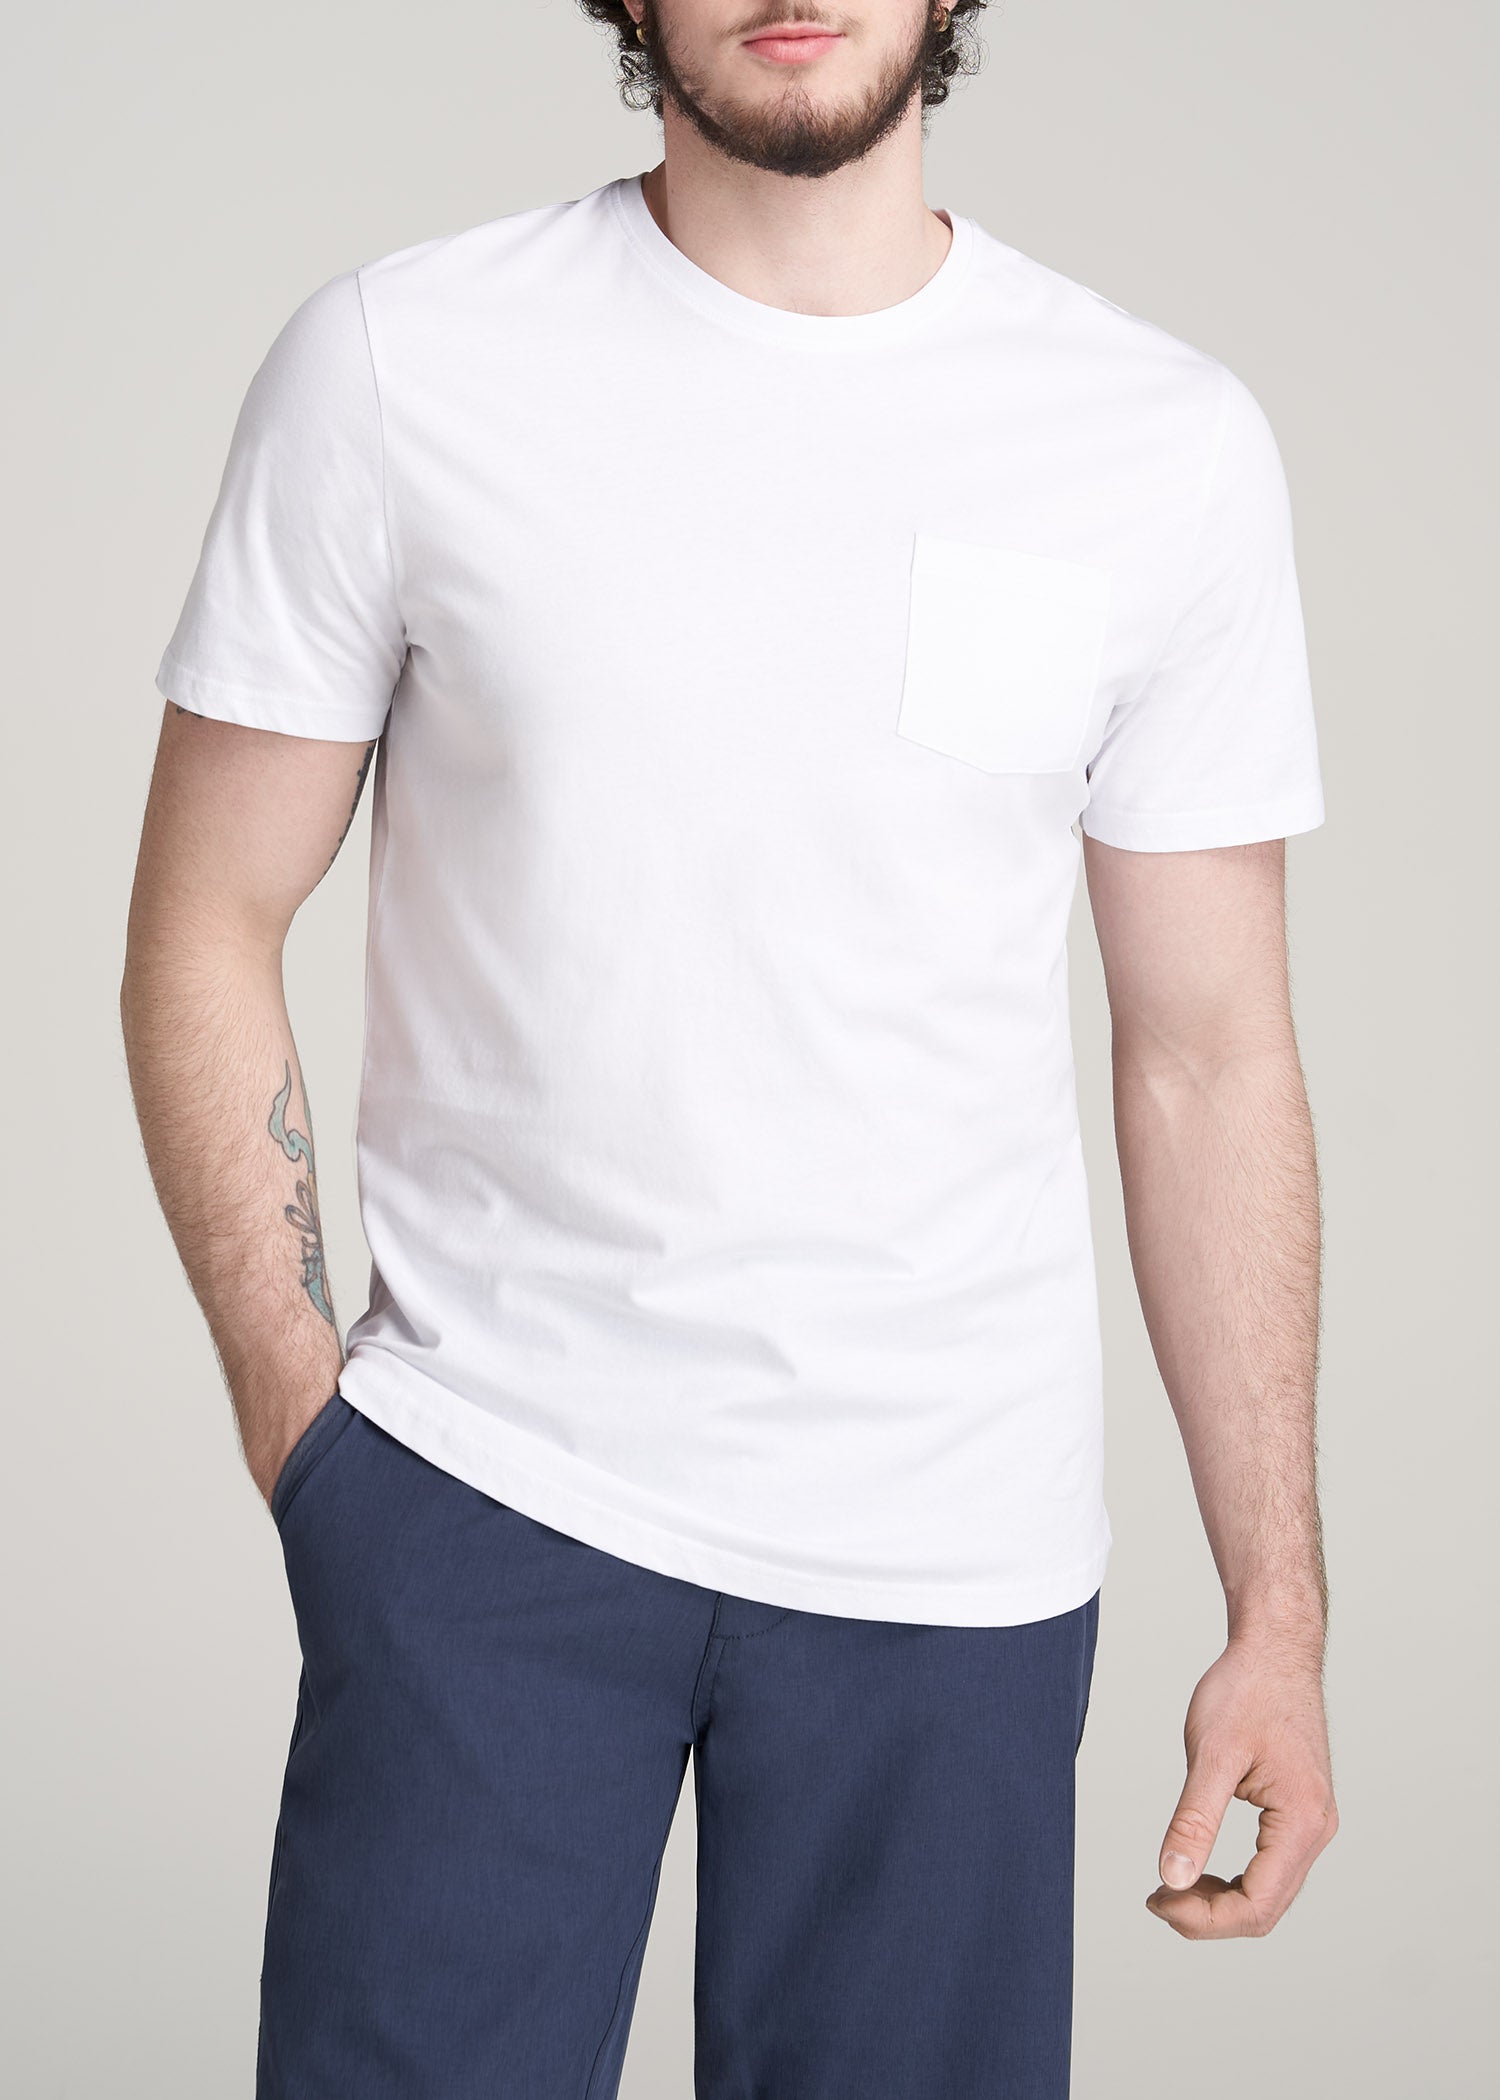 American Fit T-shirt: Men's Tall Pocket Tee | American Tall